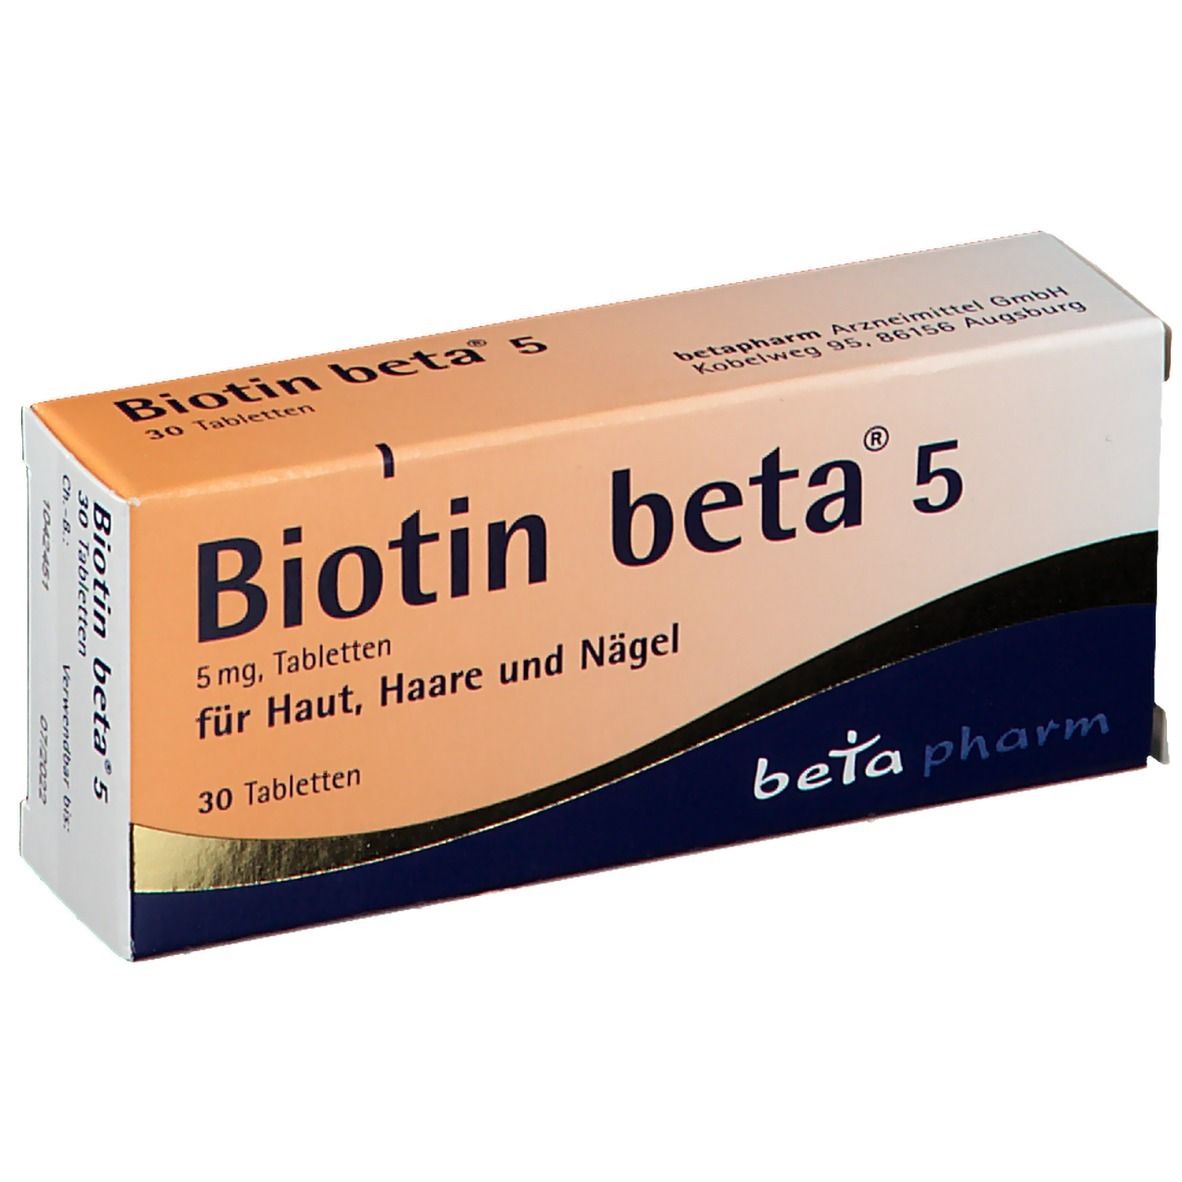 Biotin beta® 5